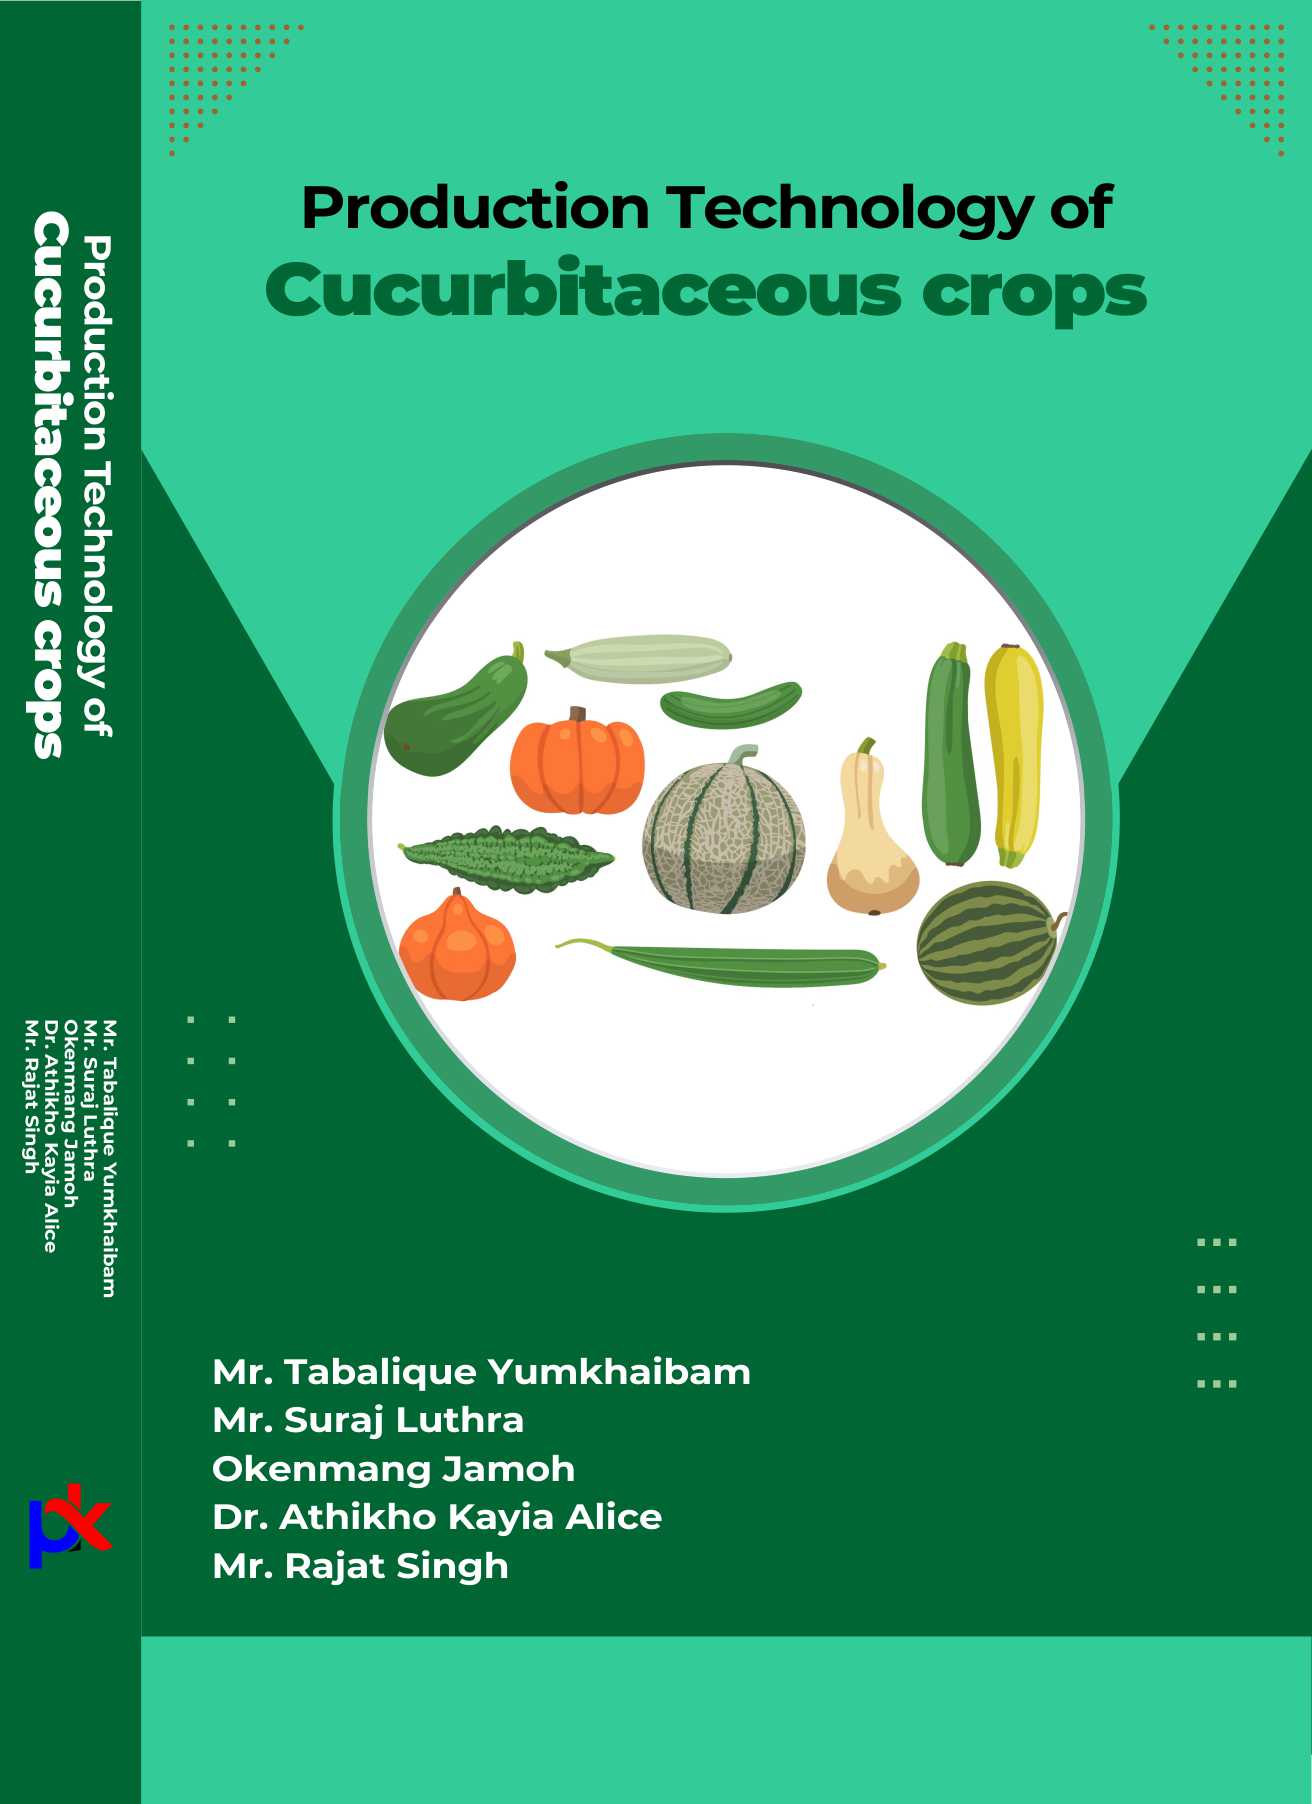 Production Technology of Cucurbitaceous crops